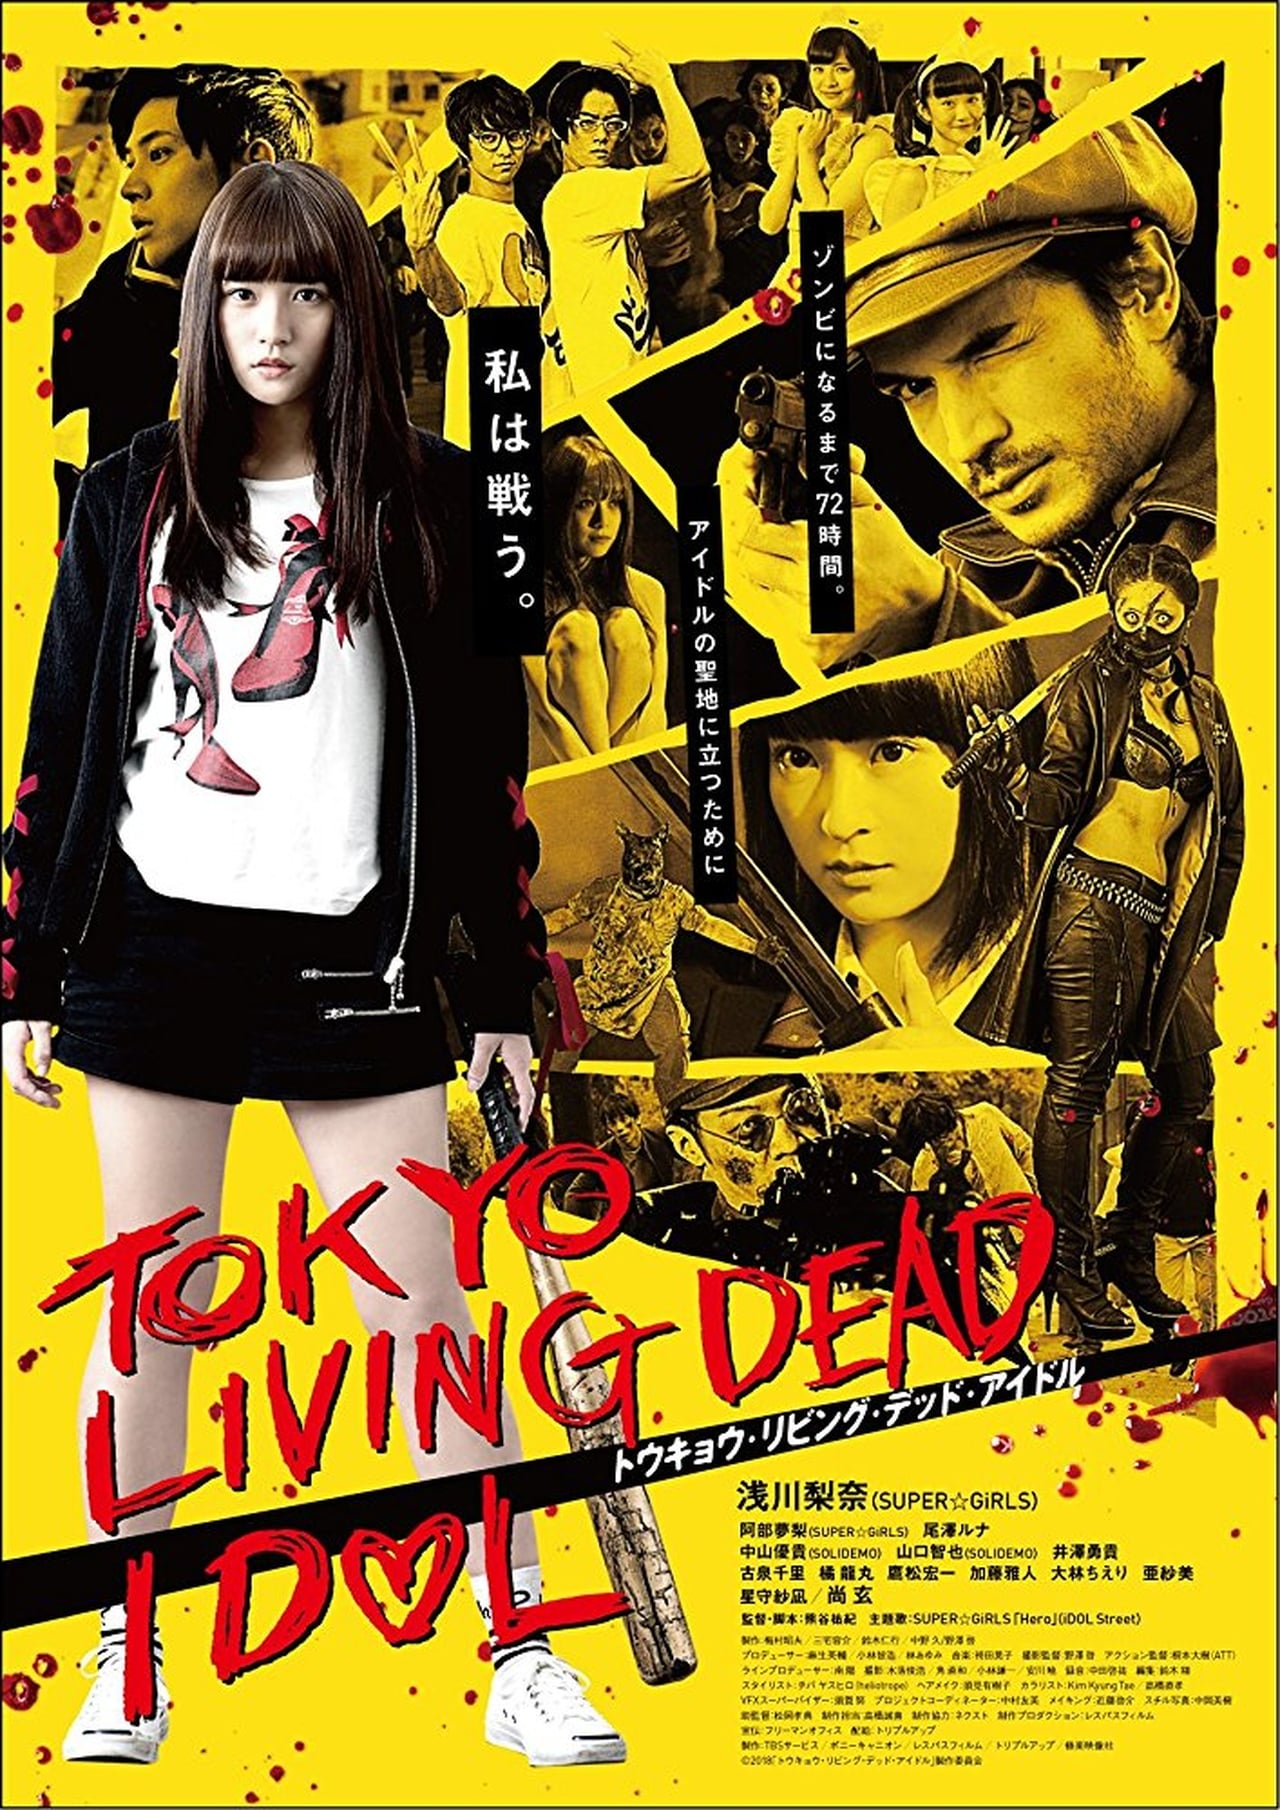 Tokyo Living Dead Idol cover